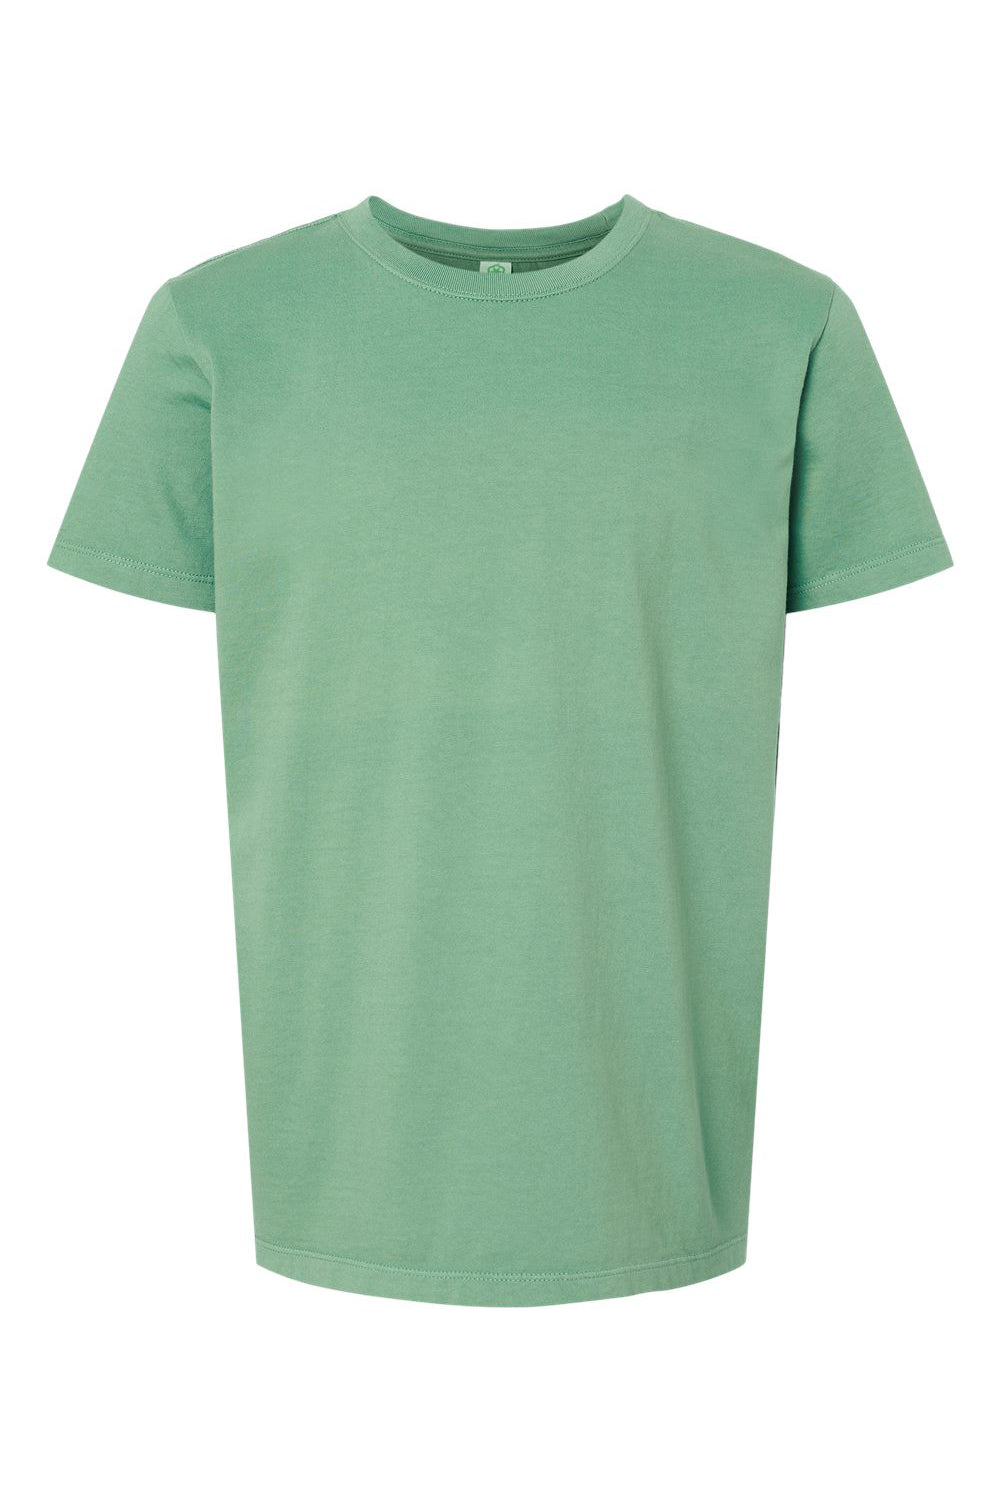 SoftShirts 402 Youth Organic Short Sleeve Crewneck T-Shirt Pine Green Flat Front